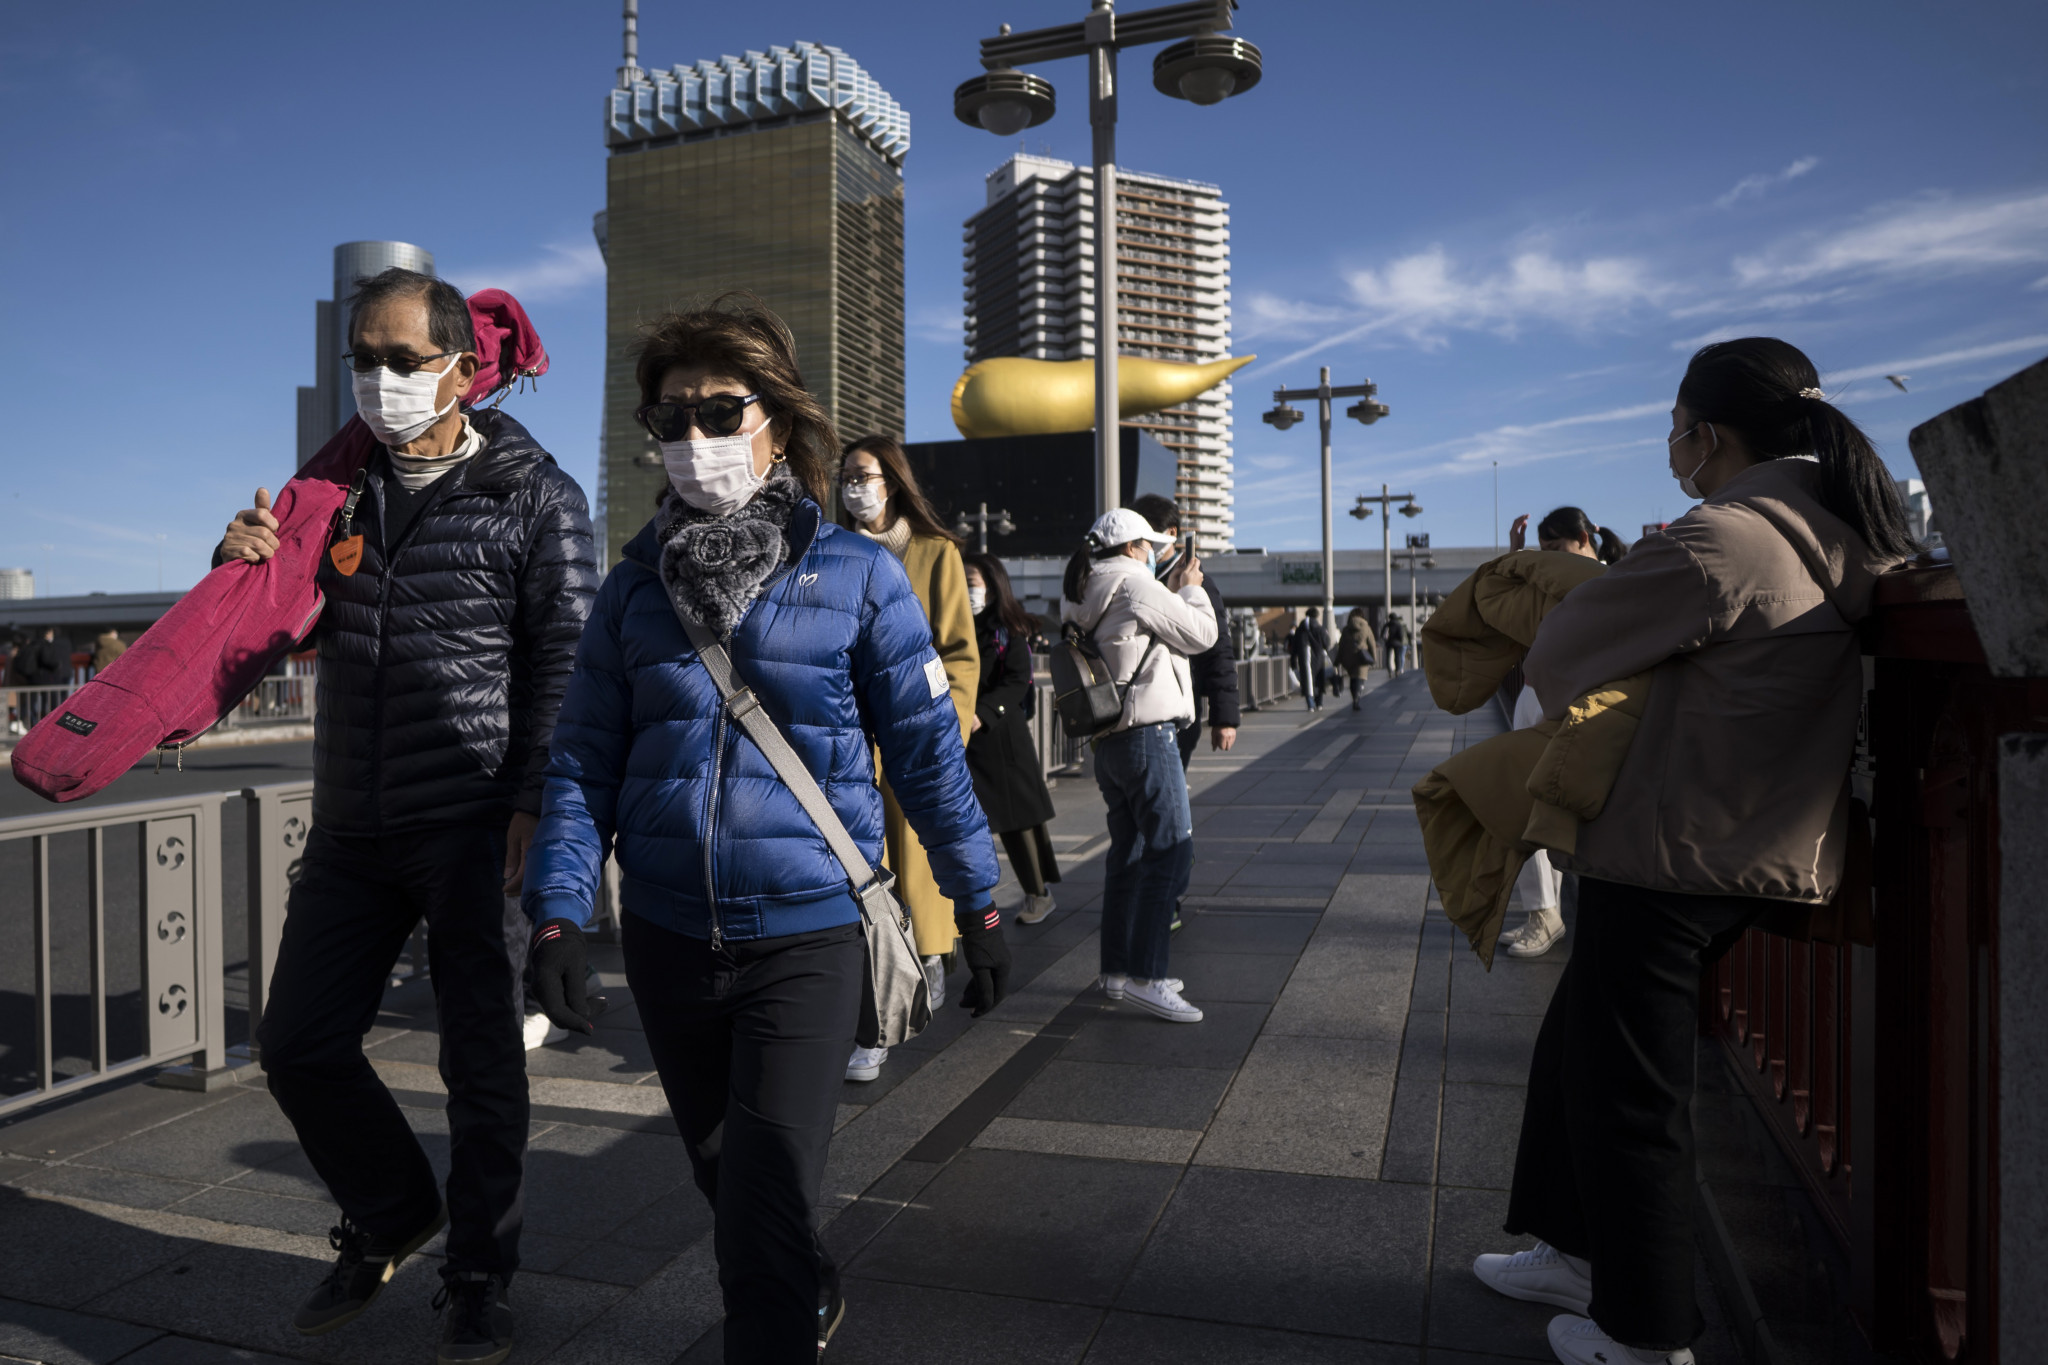 Tokyo Marathon organisers to hand out masks to runners amid coronavirus concerns